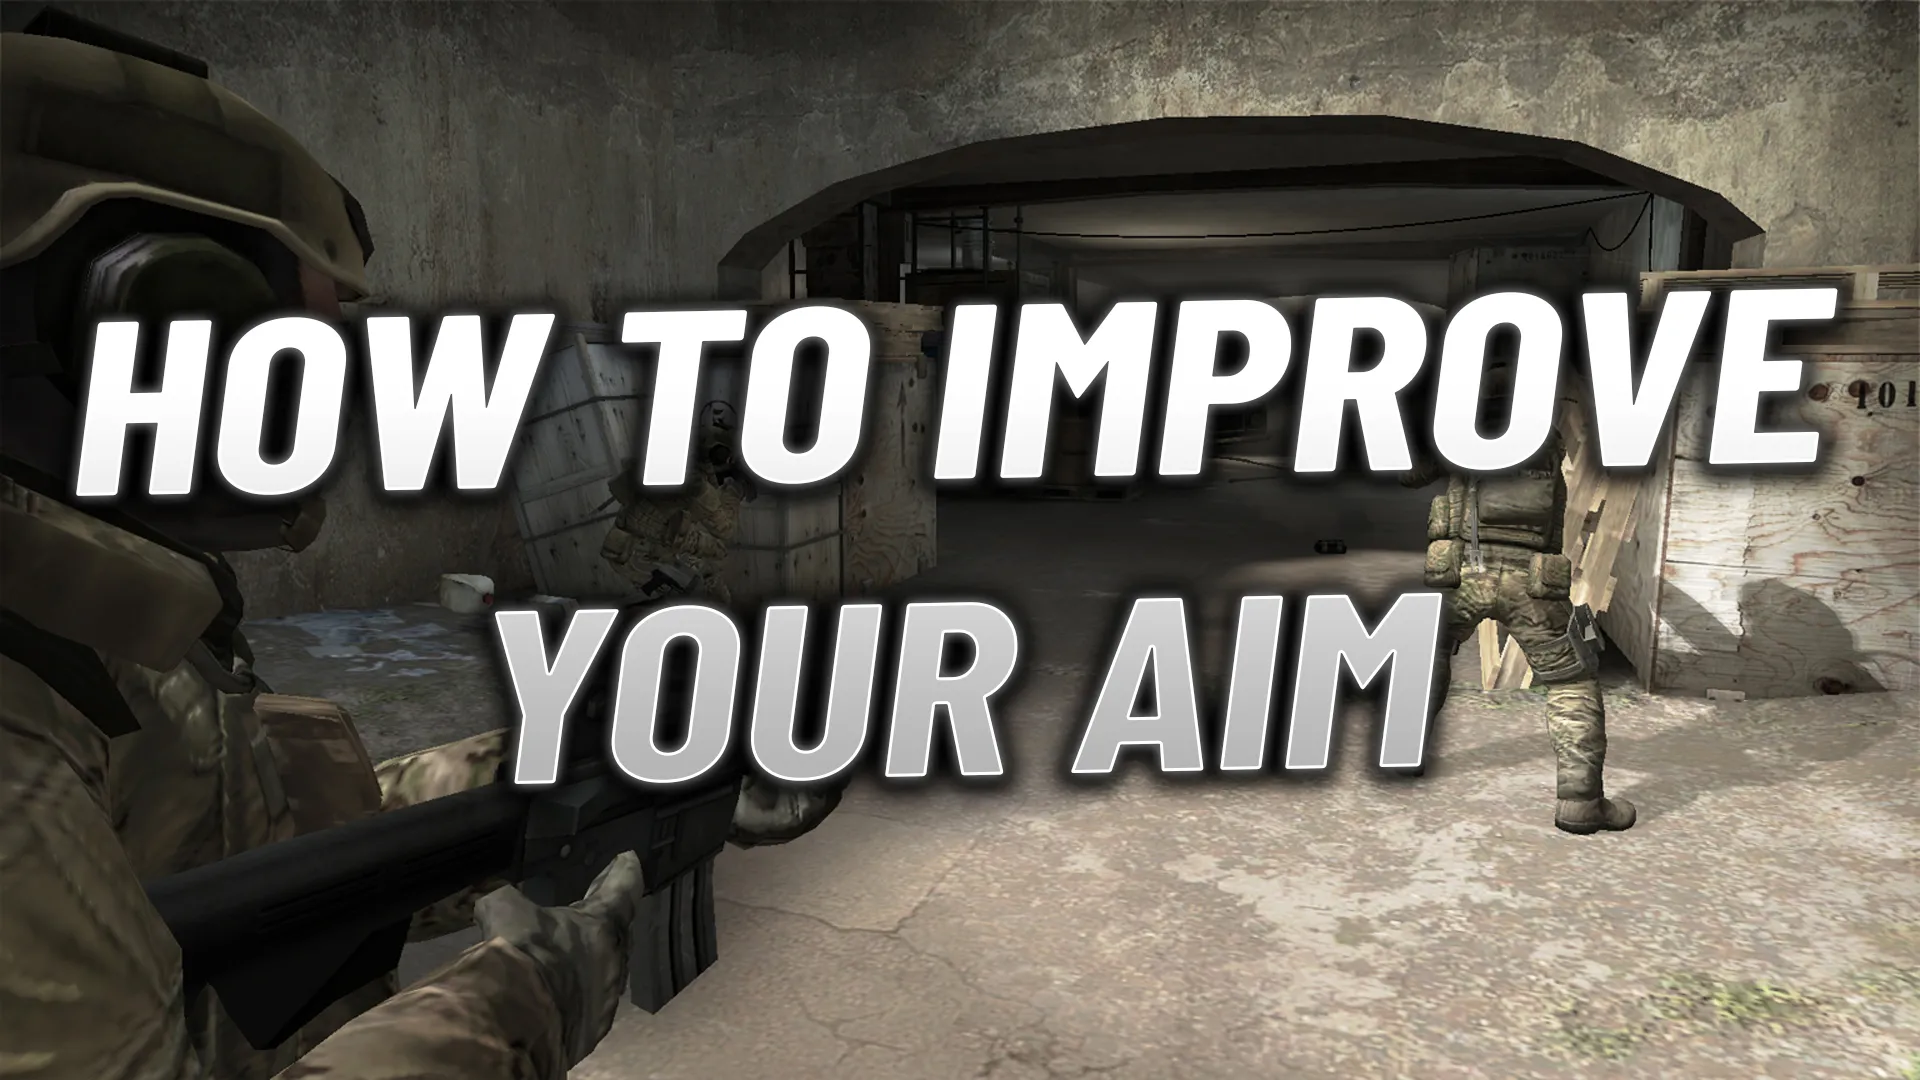 How to Practice your Aim in CS2 - Aim Botz & more.